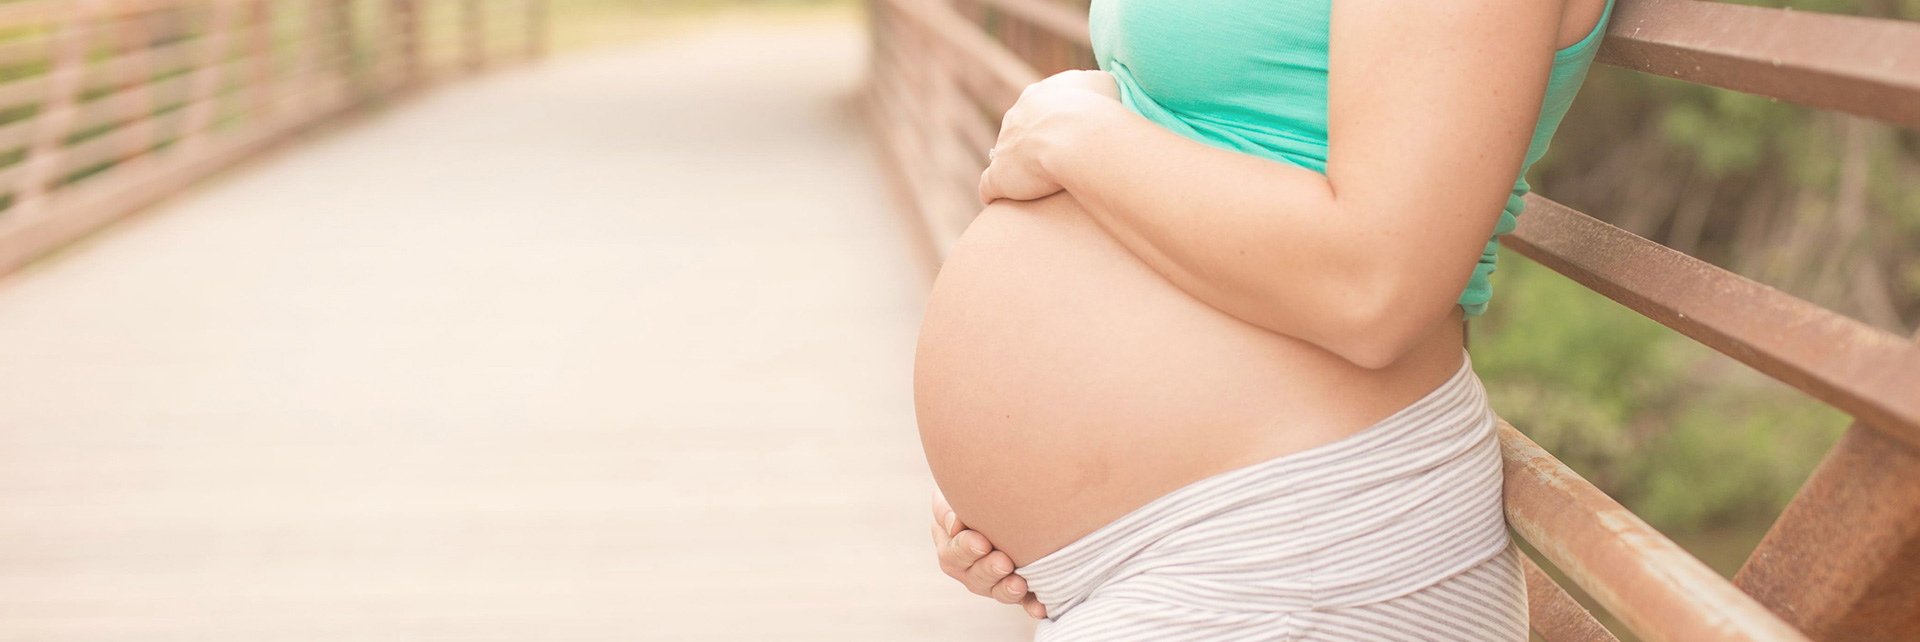 austin-expecting-maternity-photography-by-jennifer-najvar-093-1920x642